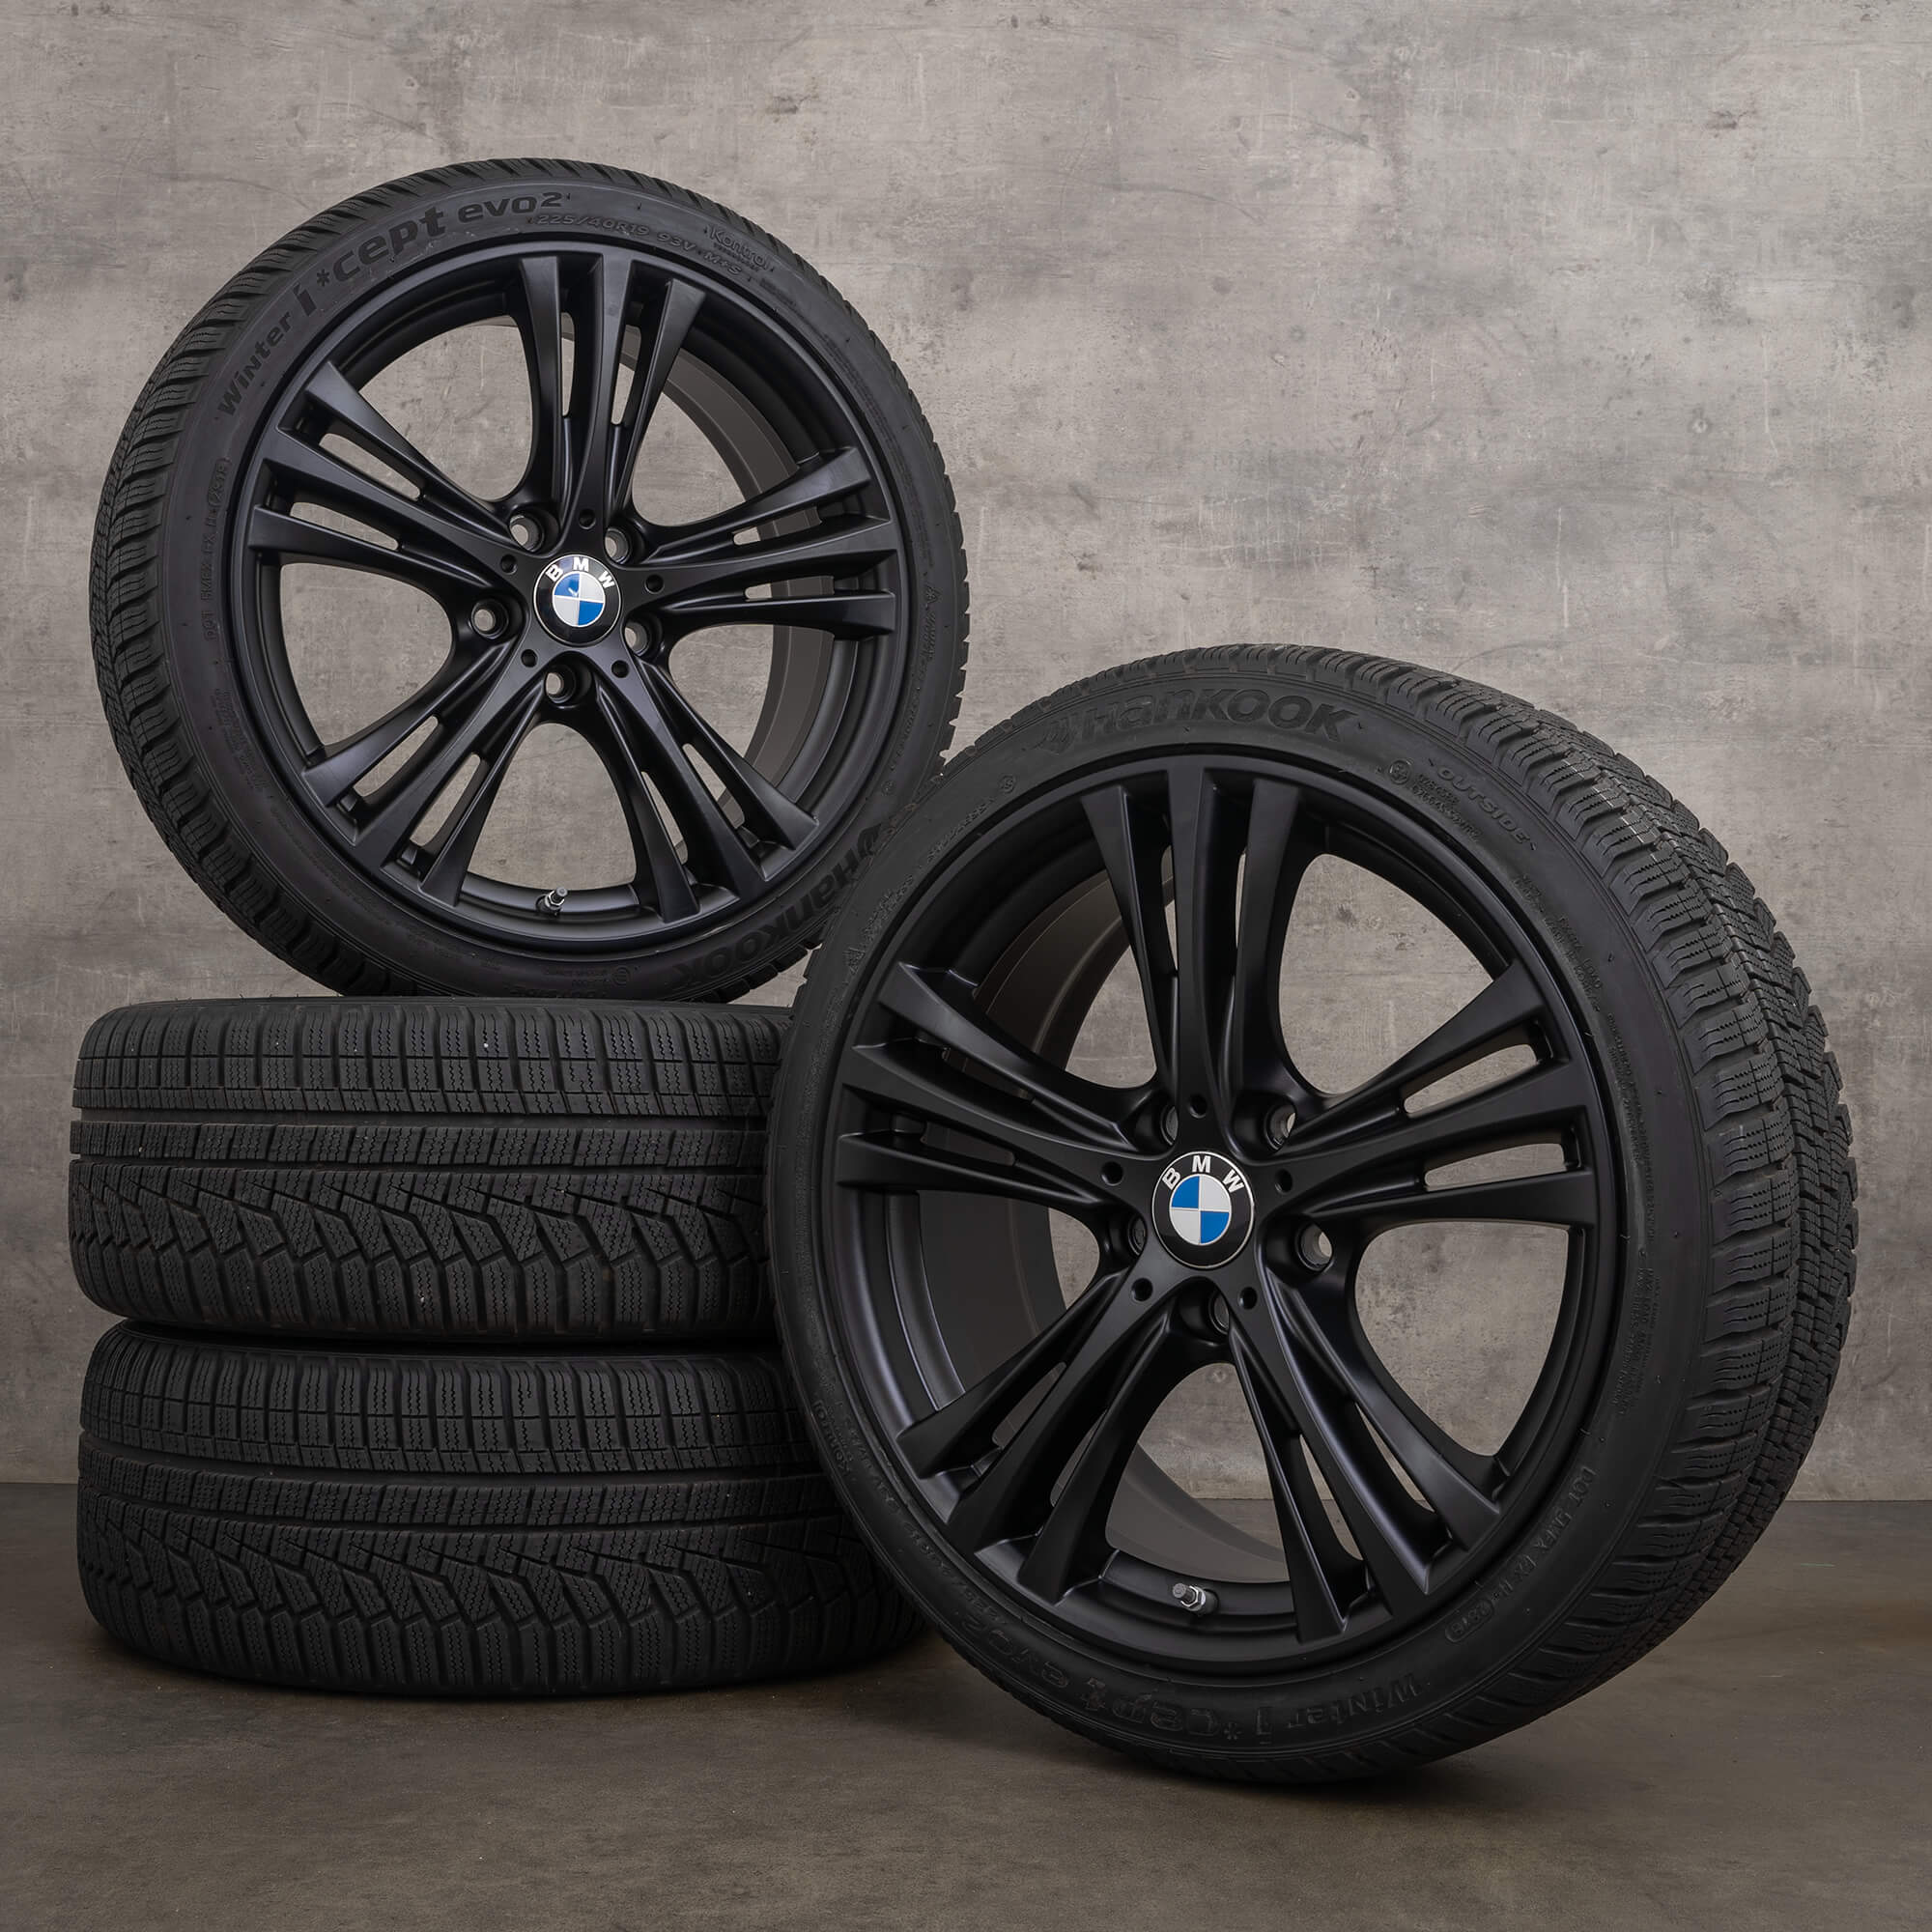 BMW 3 Series F30 F31 4 F32 F33 F36 19 inch winter wheels Styling 407 rims tires 6857565 painted black